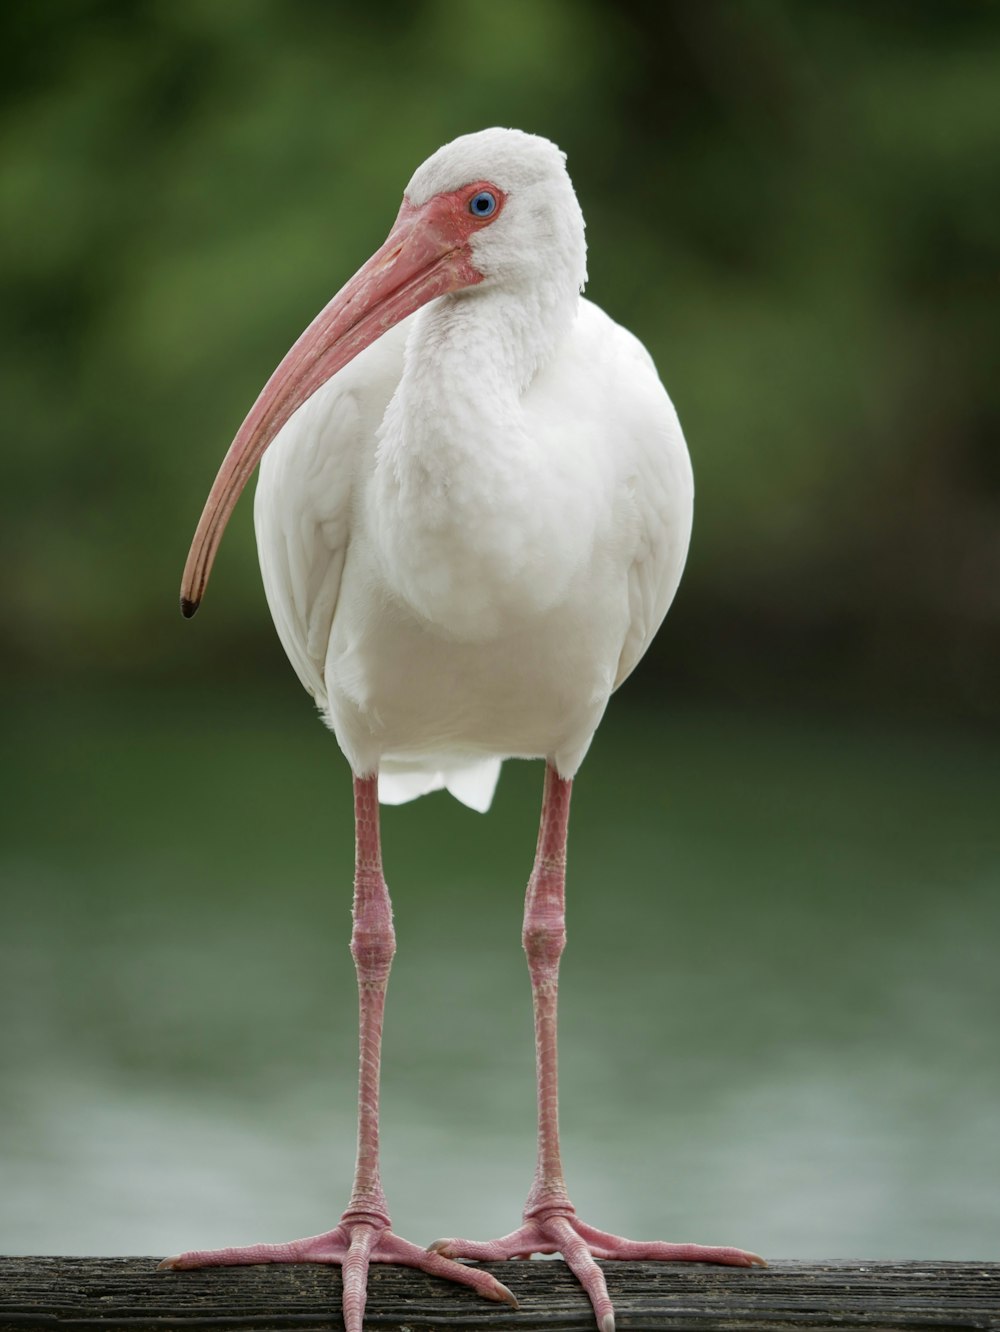 a white bird with a long beak standing on a log